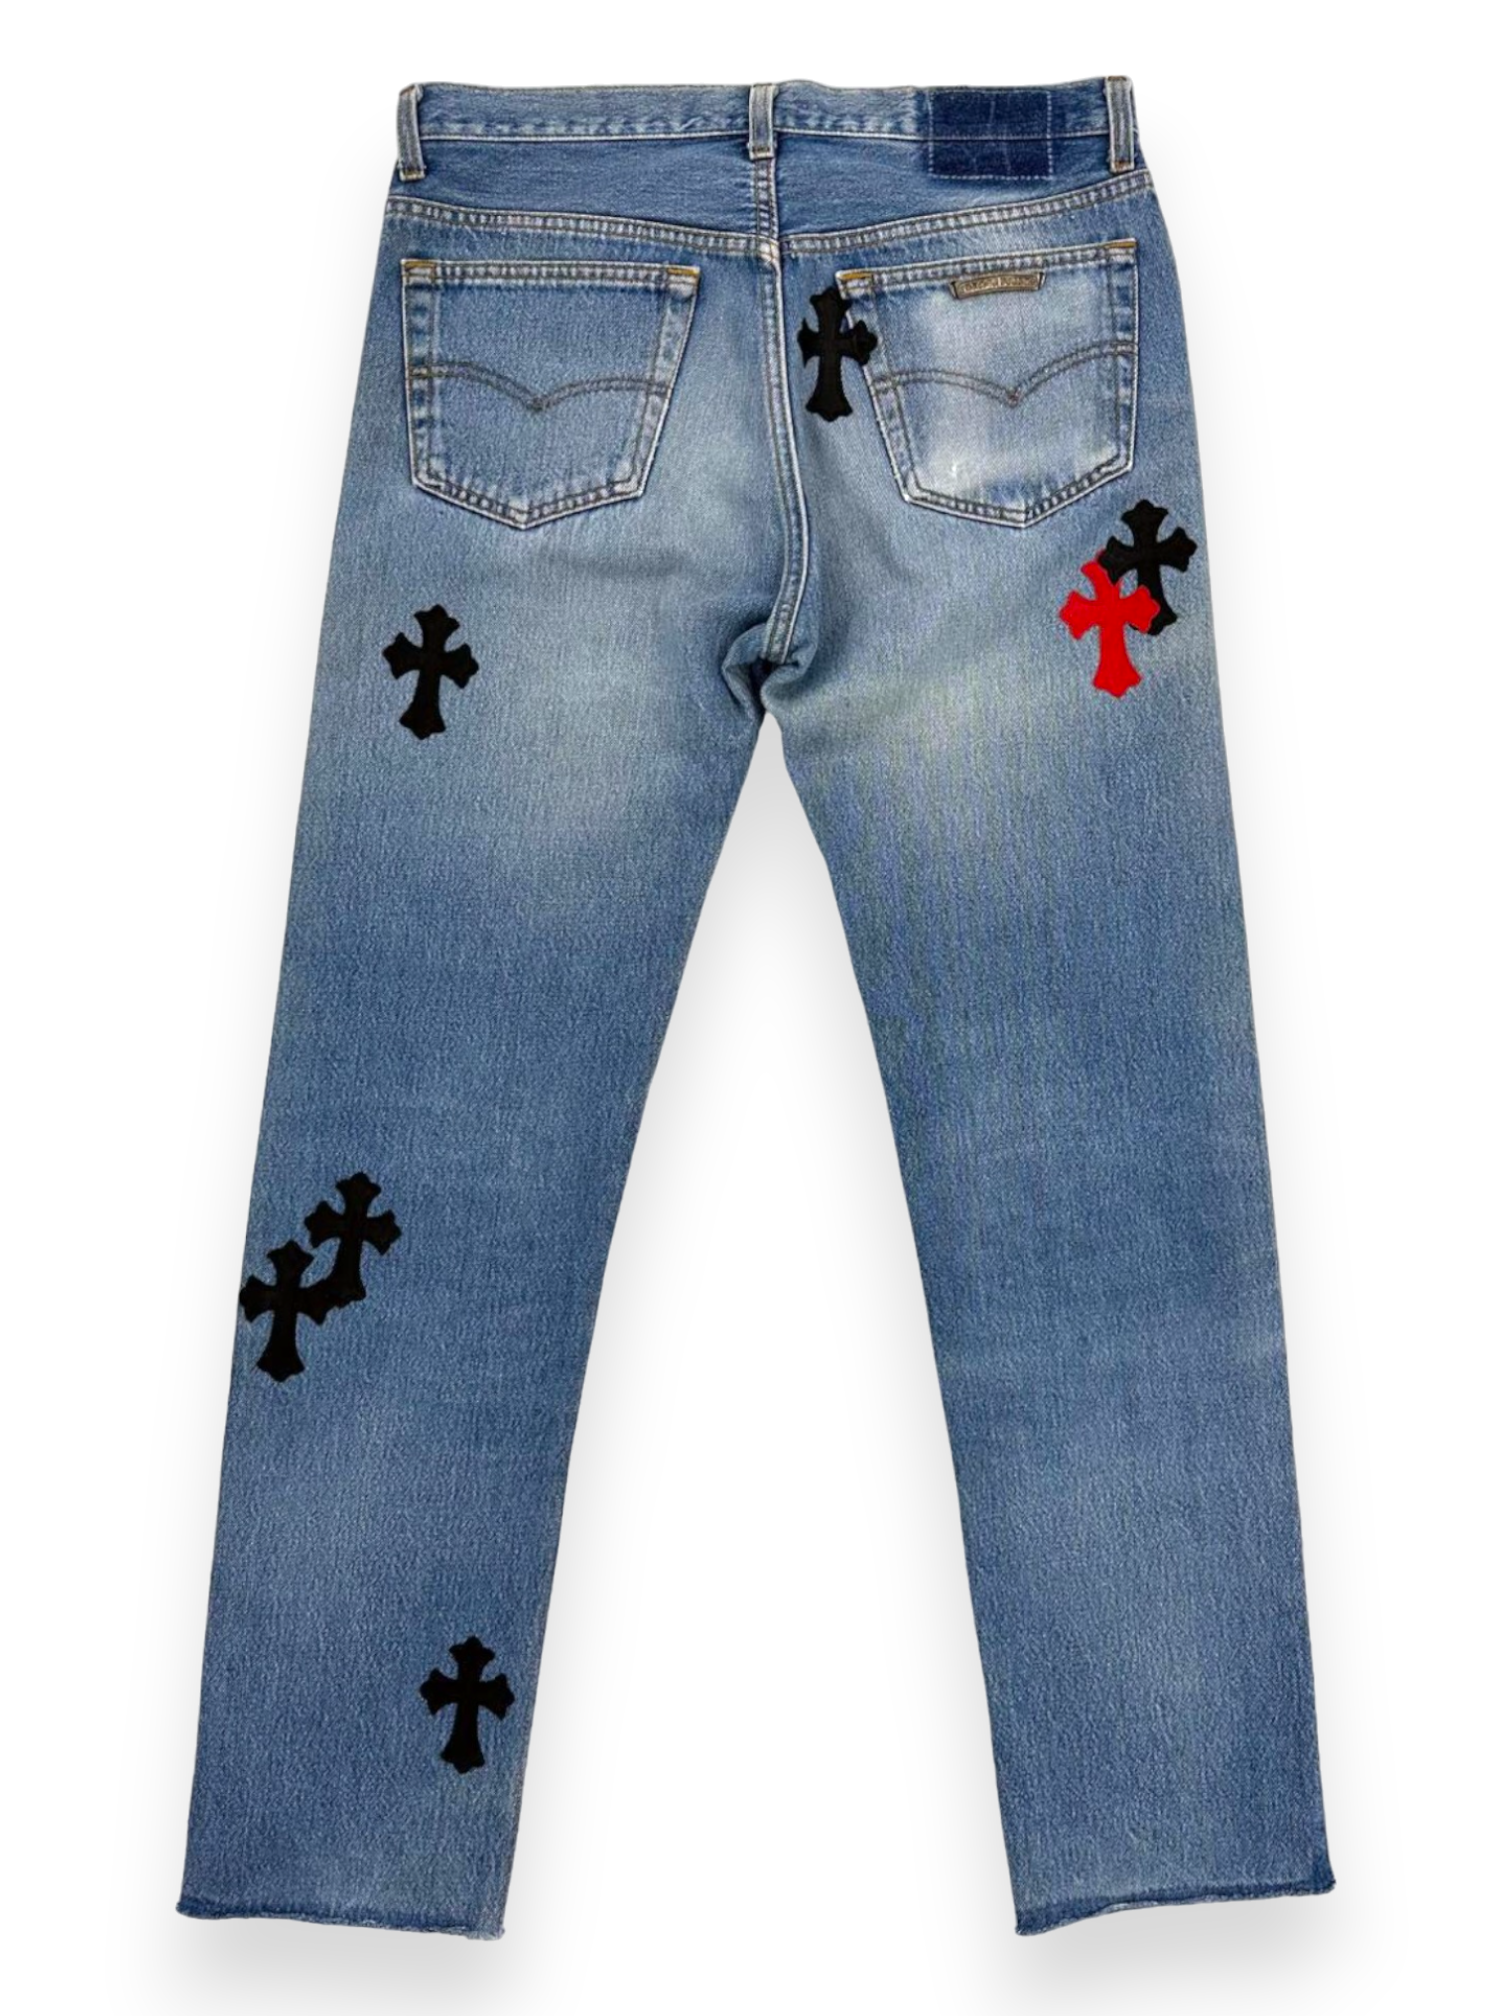 Chrome Hearts 1/1 Red Black Cross Patch Levi’s Blue Denim Jeans